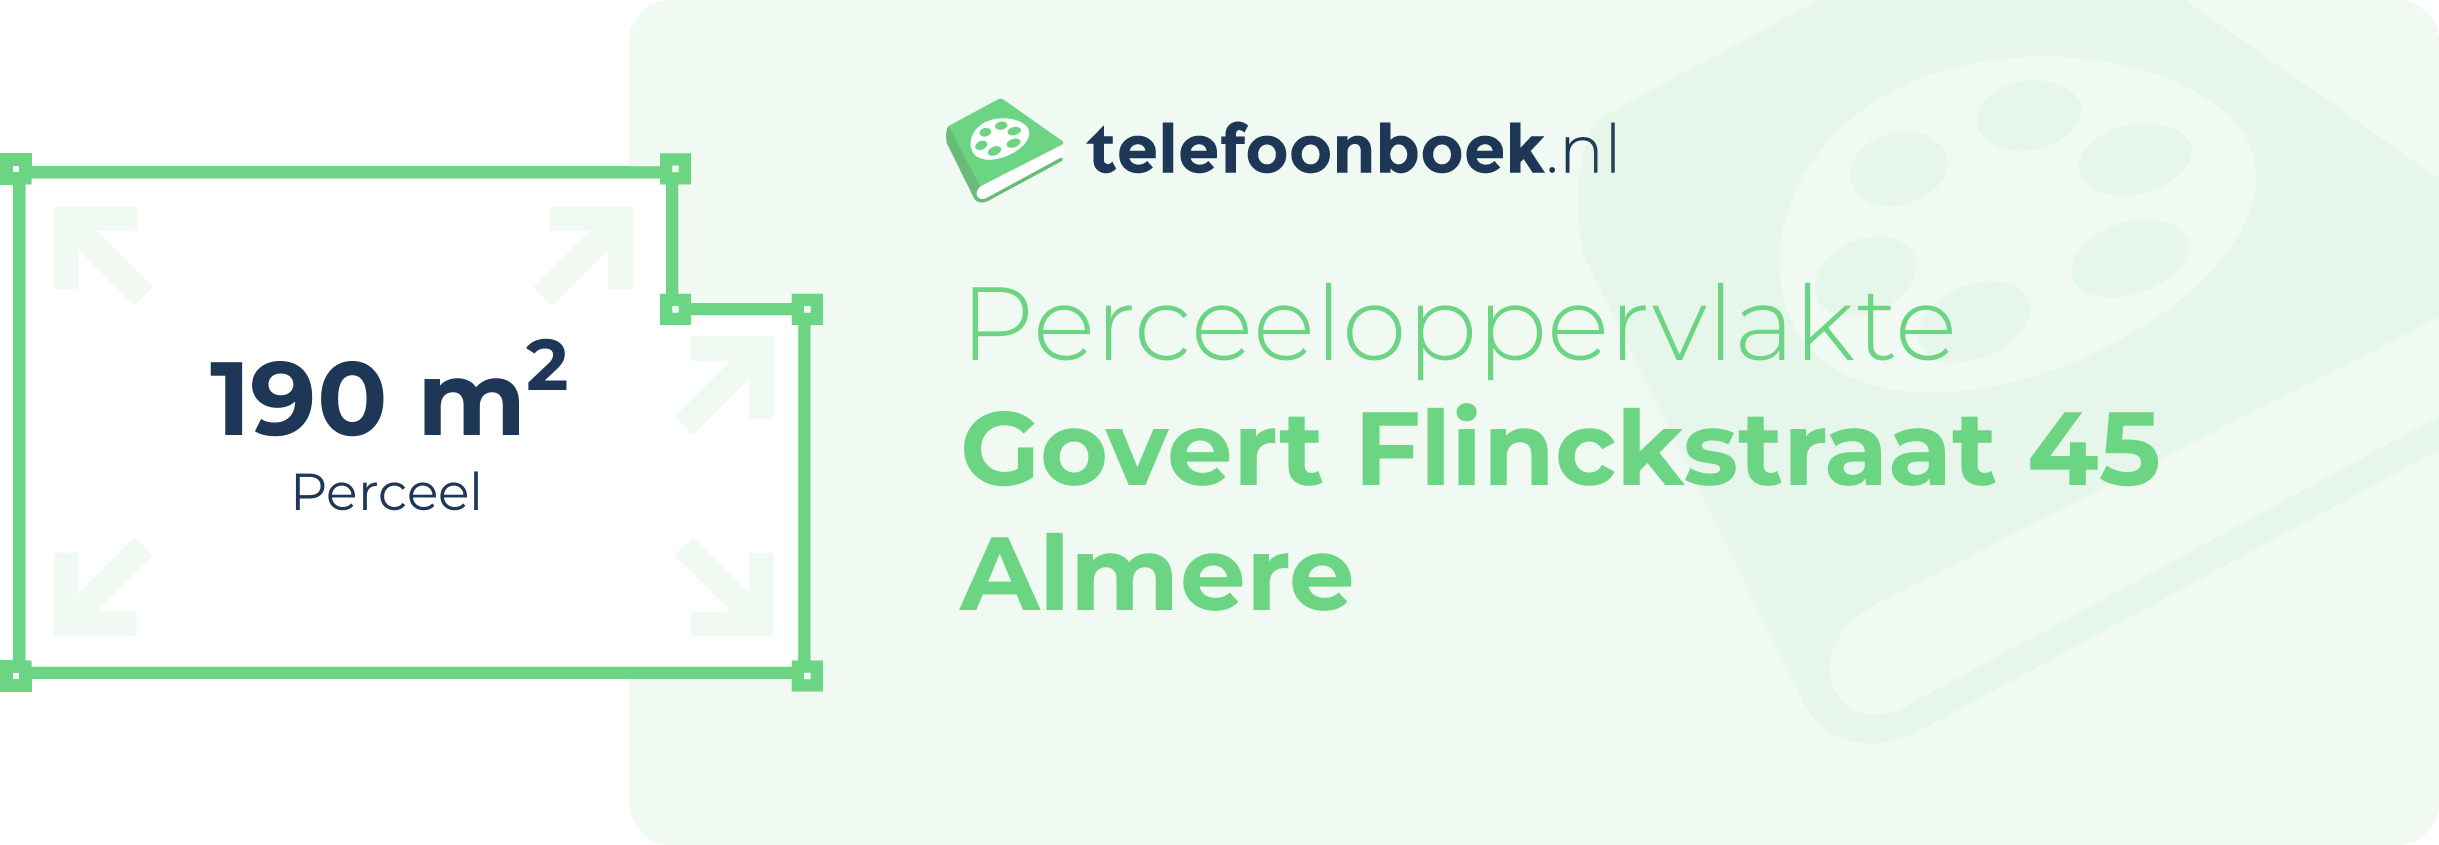 Perceeloppervlakte Govert Flinckstraat 45 Almere